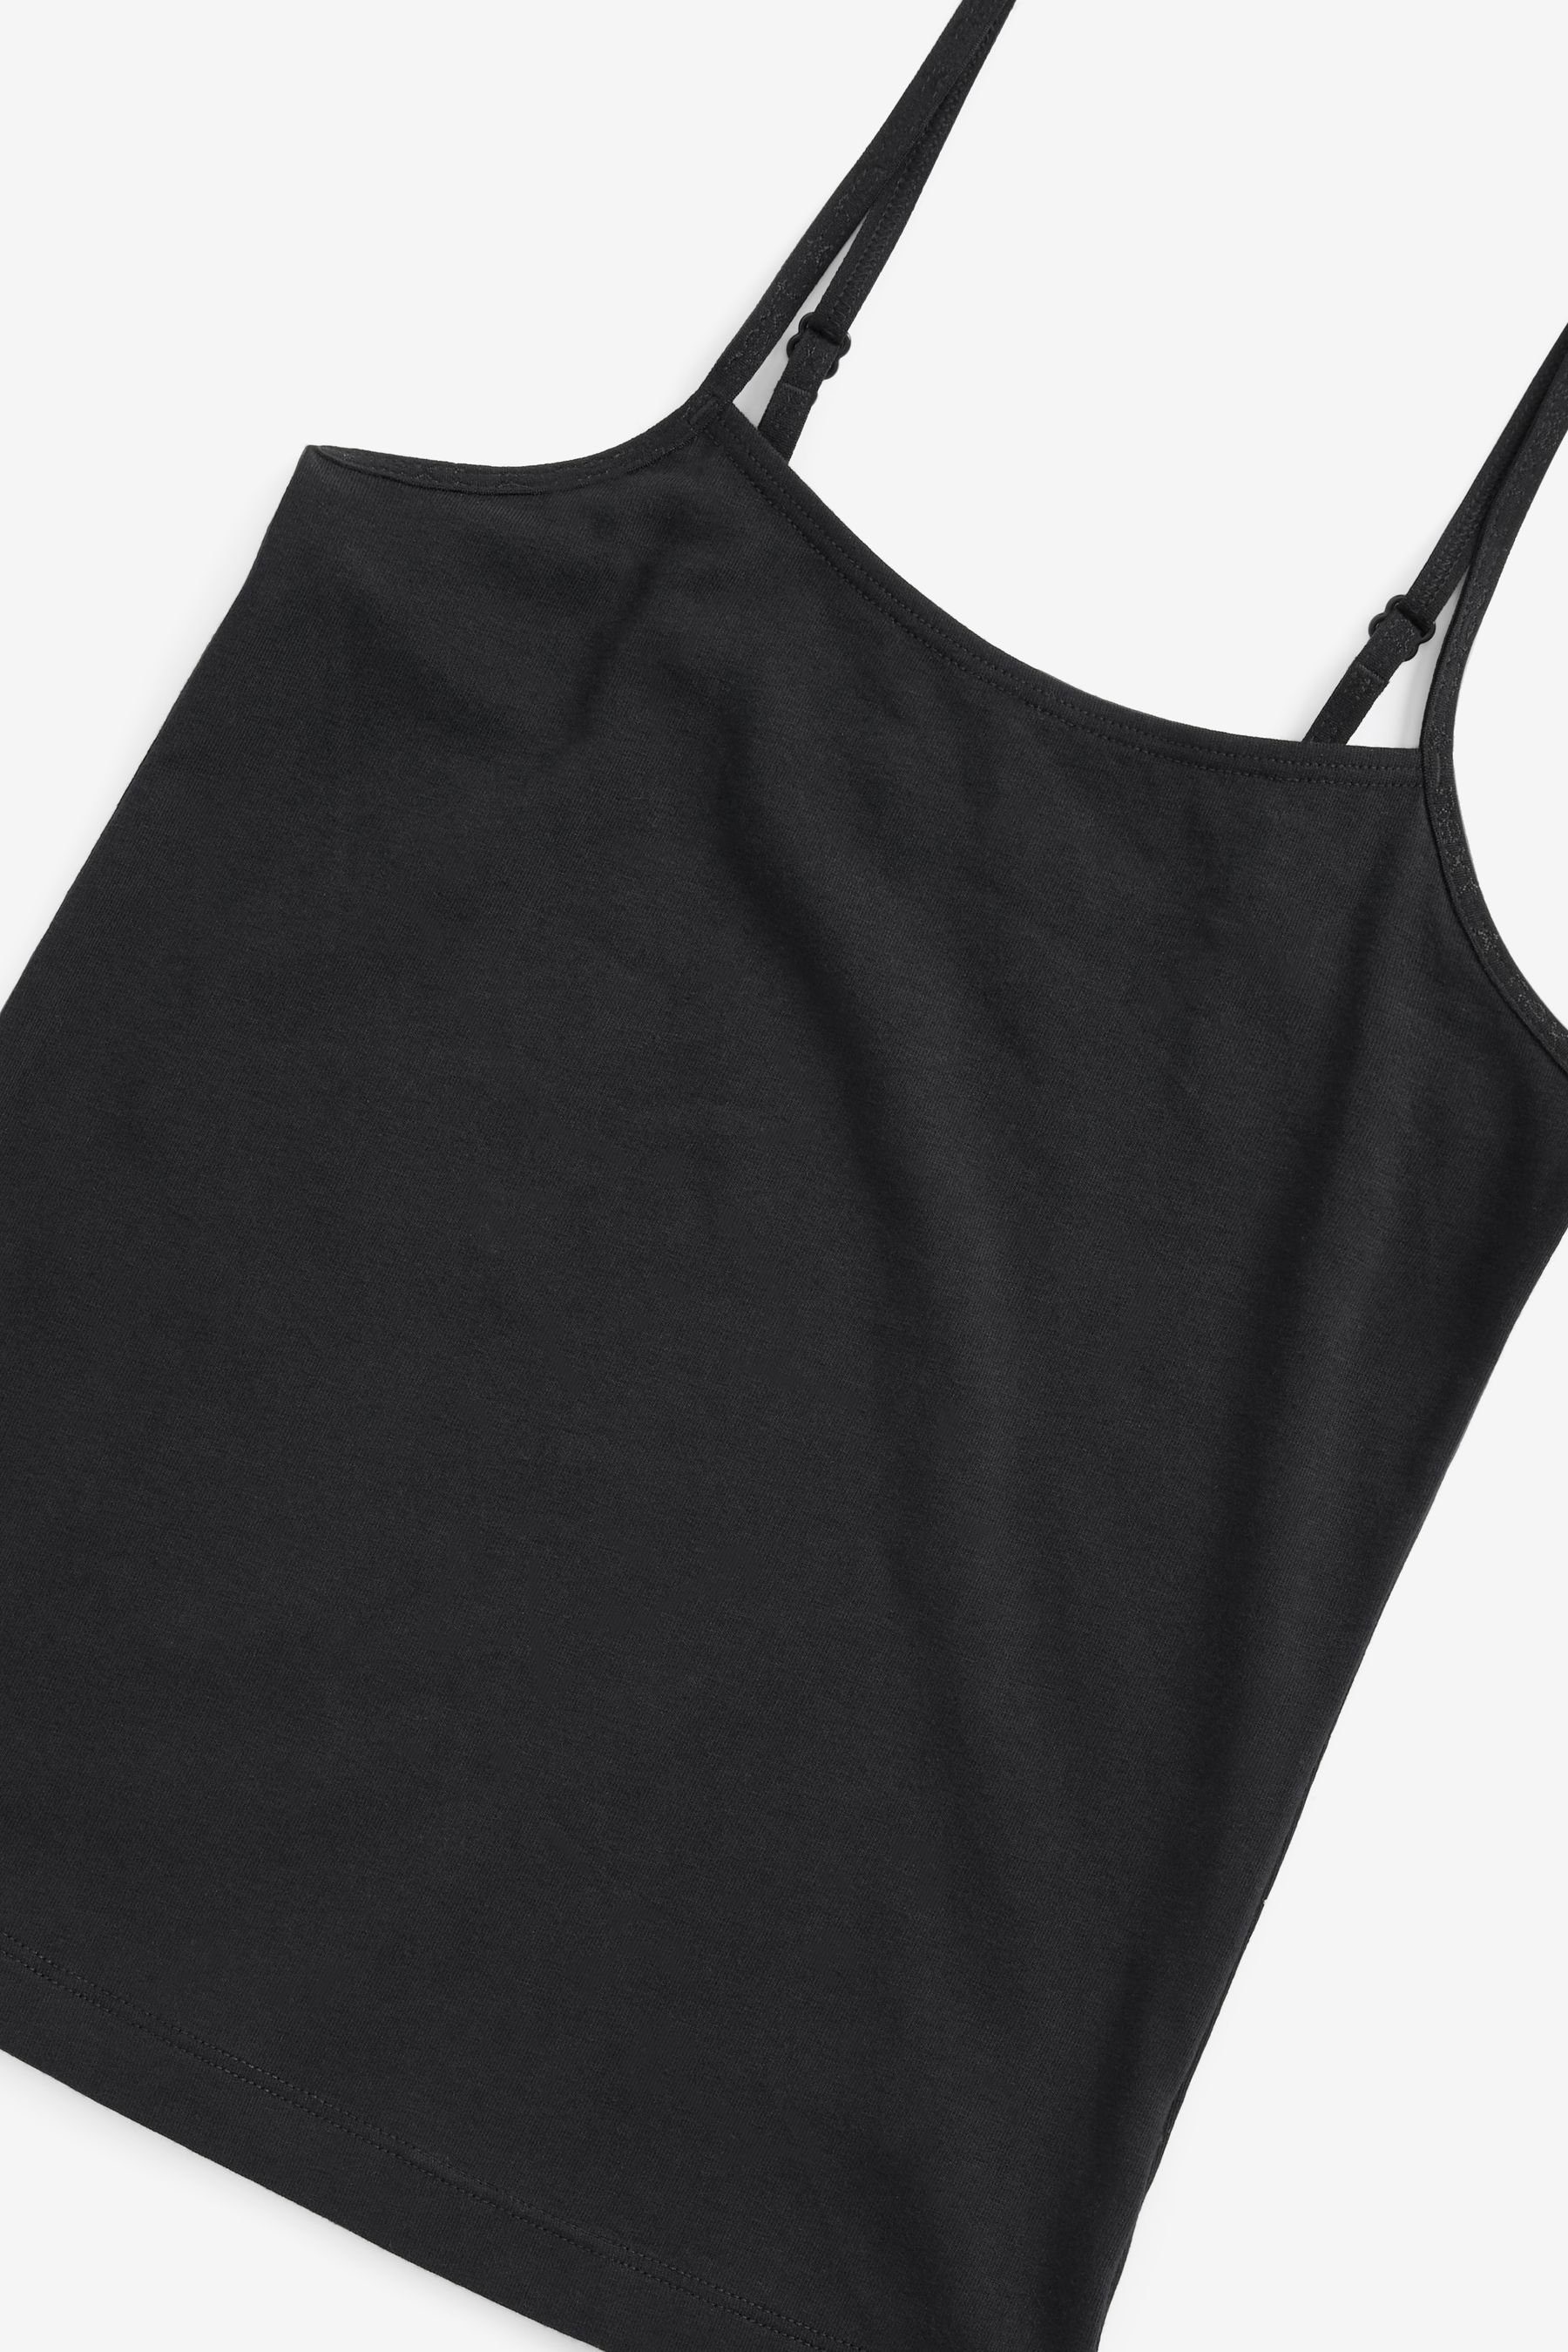 Next Unterhemd Trägertops mit 3er-Pack (3-St) im Spaghettiträgern Black